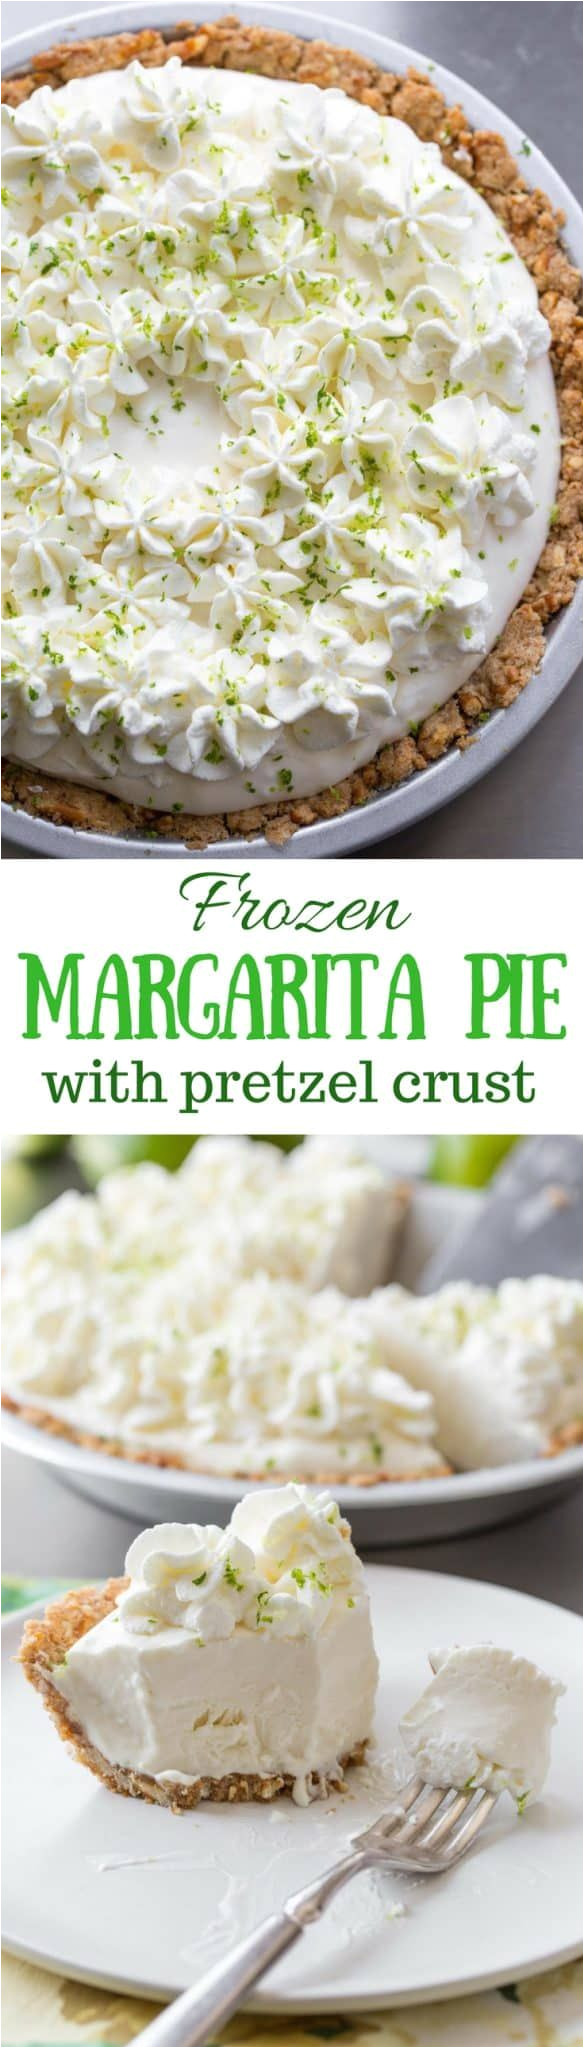 frozen margarita pie with a pretzel crust a wonderful light creamy grown up